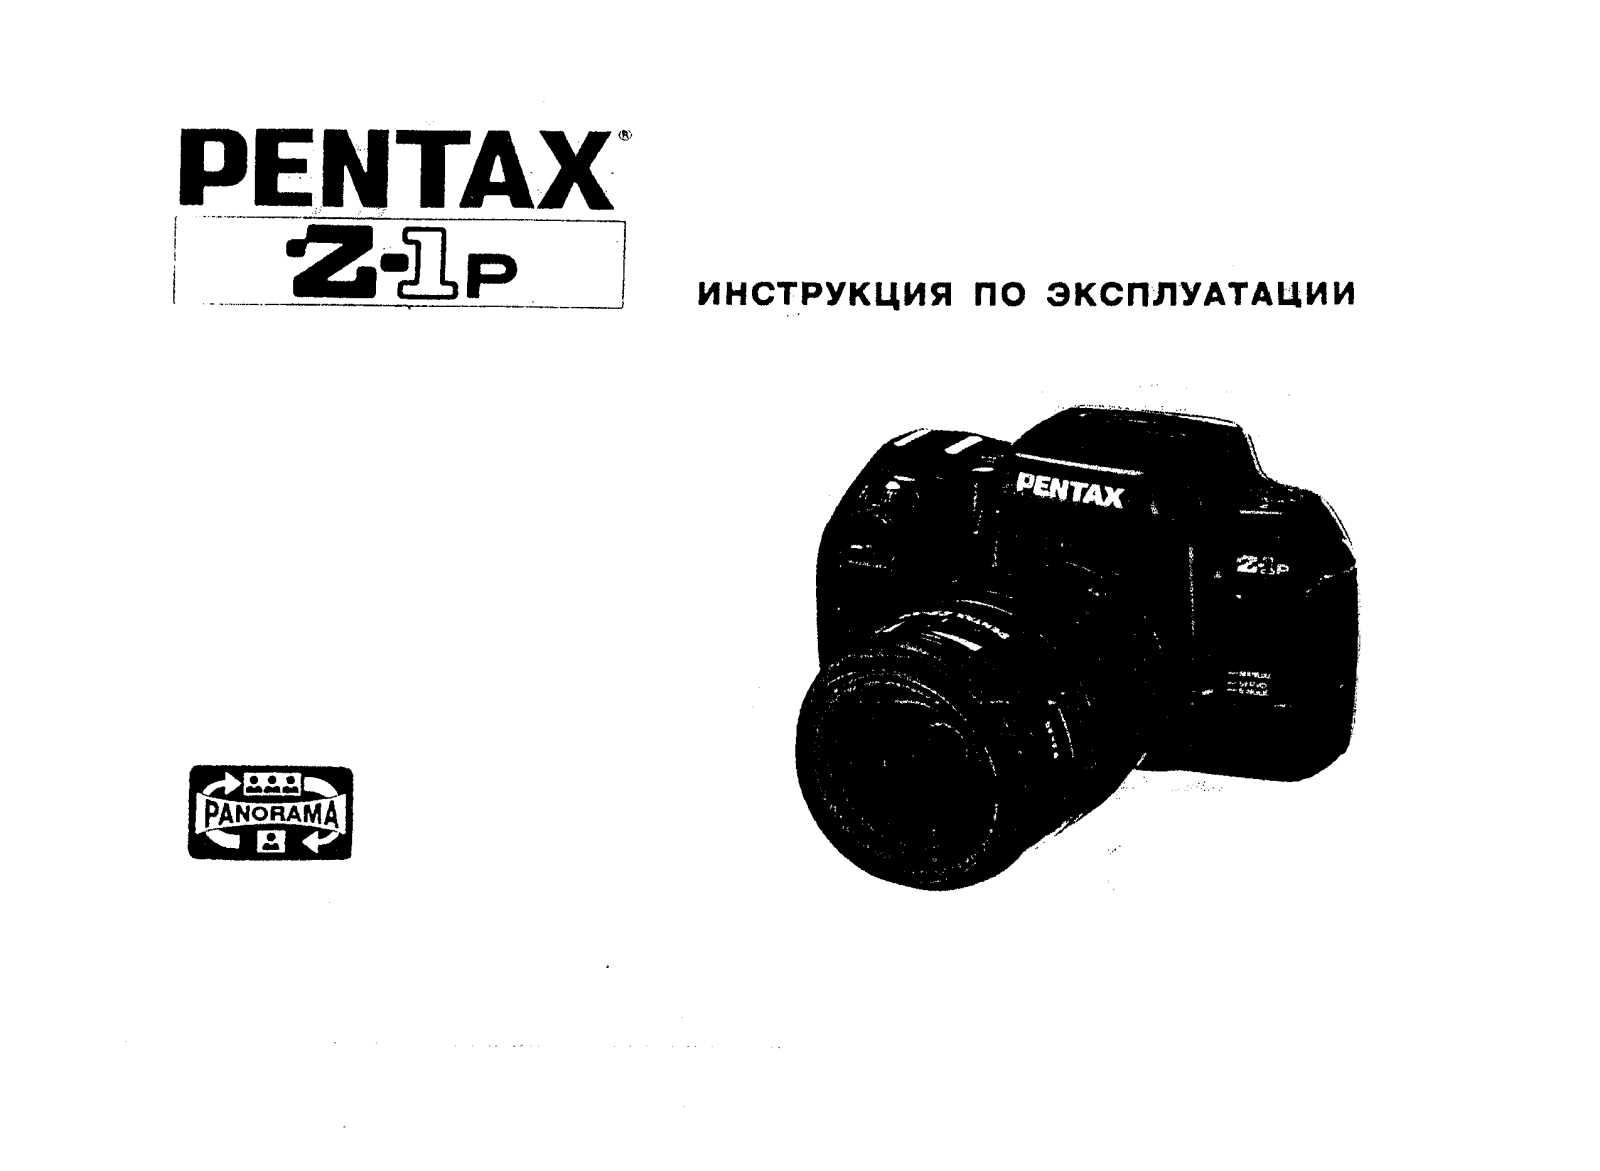 Pentax Z-1p User Manual